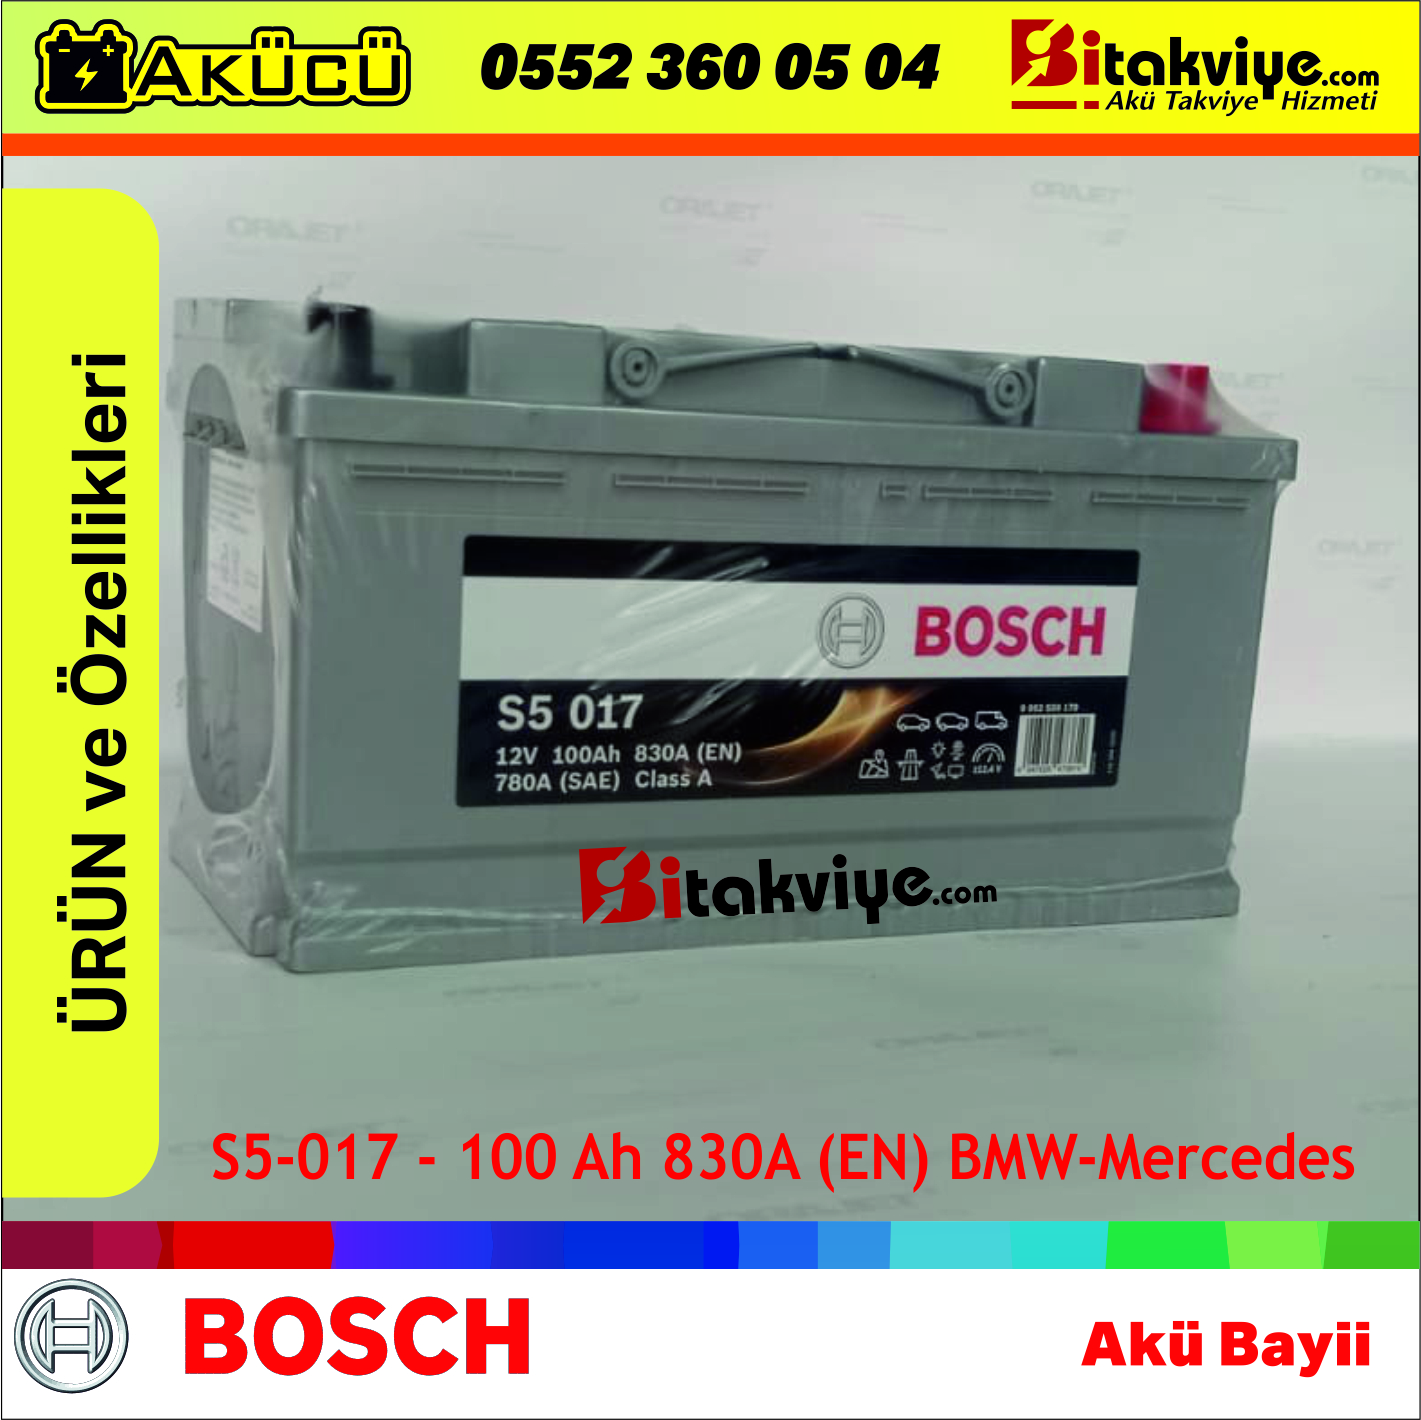 Bosch S5 017 12 V 100 Ah - 830 A (EN) Akü